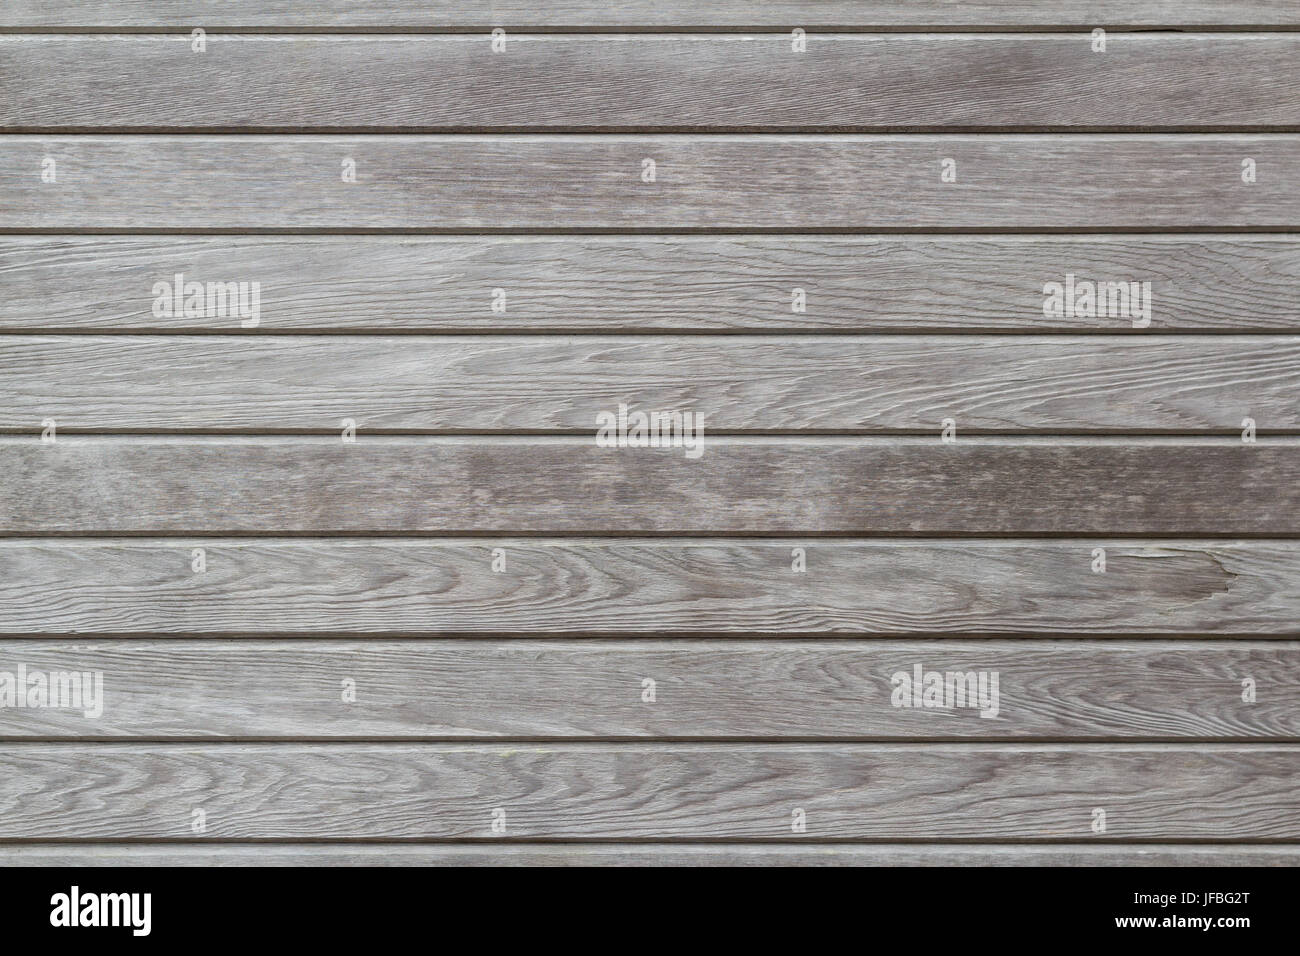 Textura de madera marrón gris desgastada con patrones naturales, horizontal, antecedentes Foto de stock